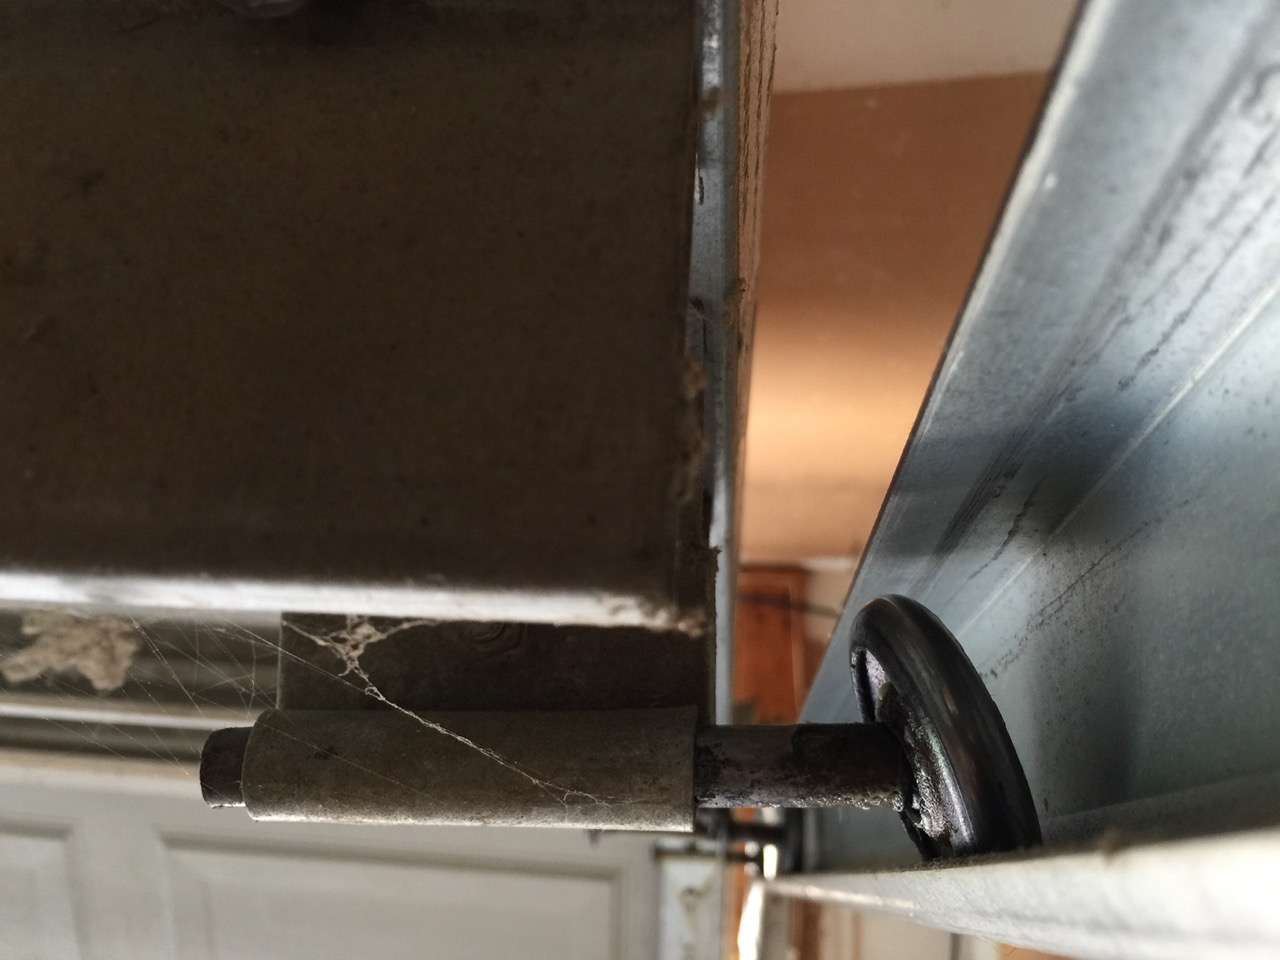 Worn garage door roller with failed bearings that needs replacement